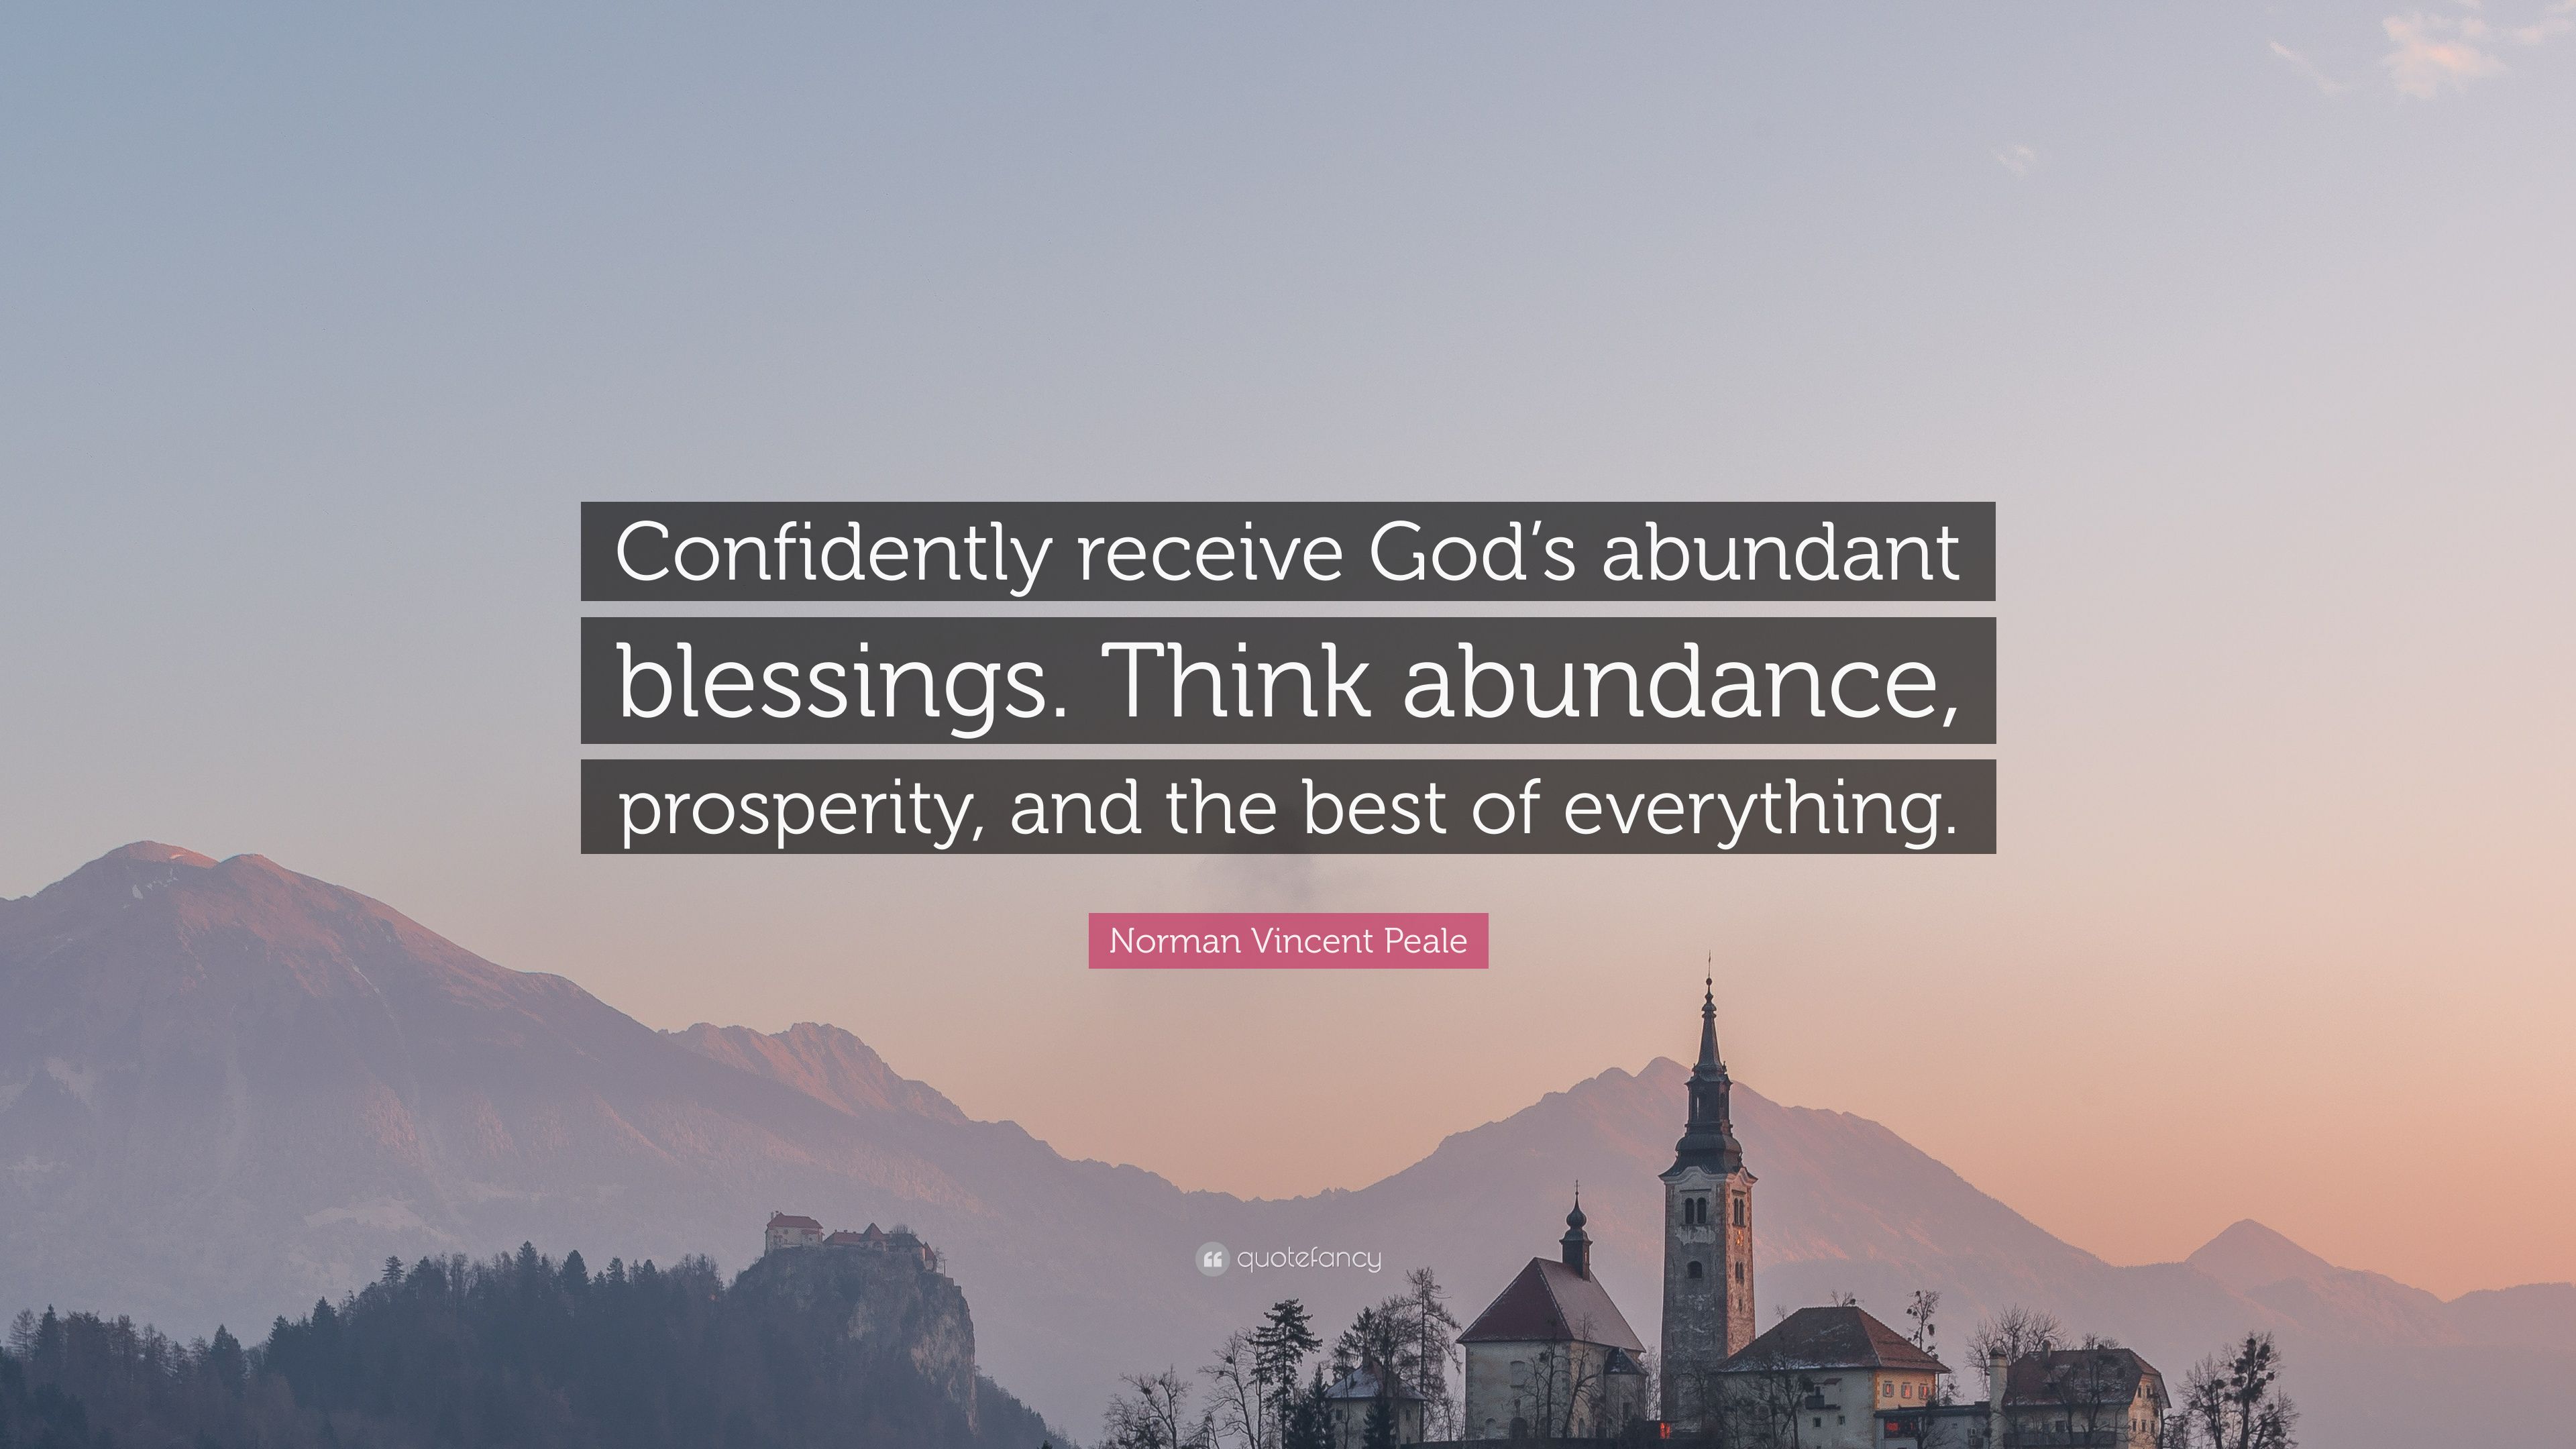 Norman Vincent Peale Quote: “Confidently receive God's abundant